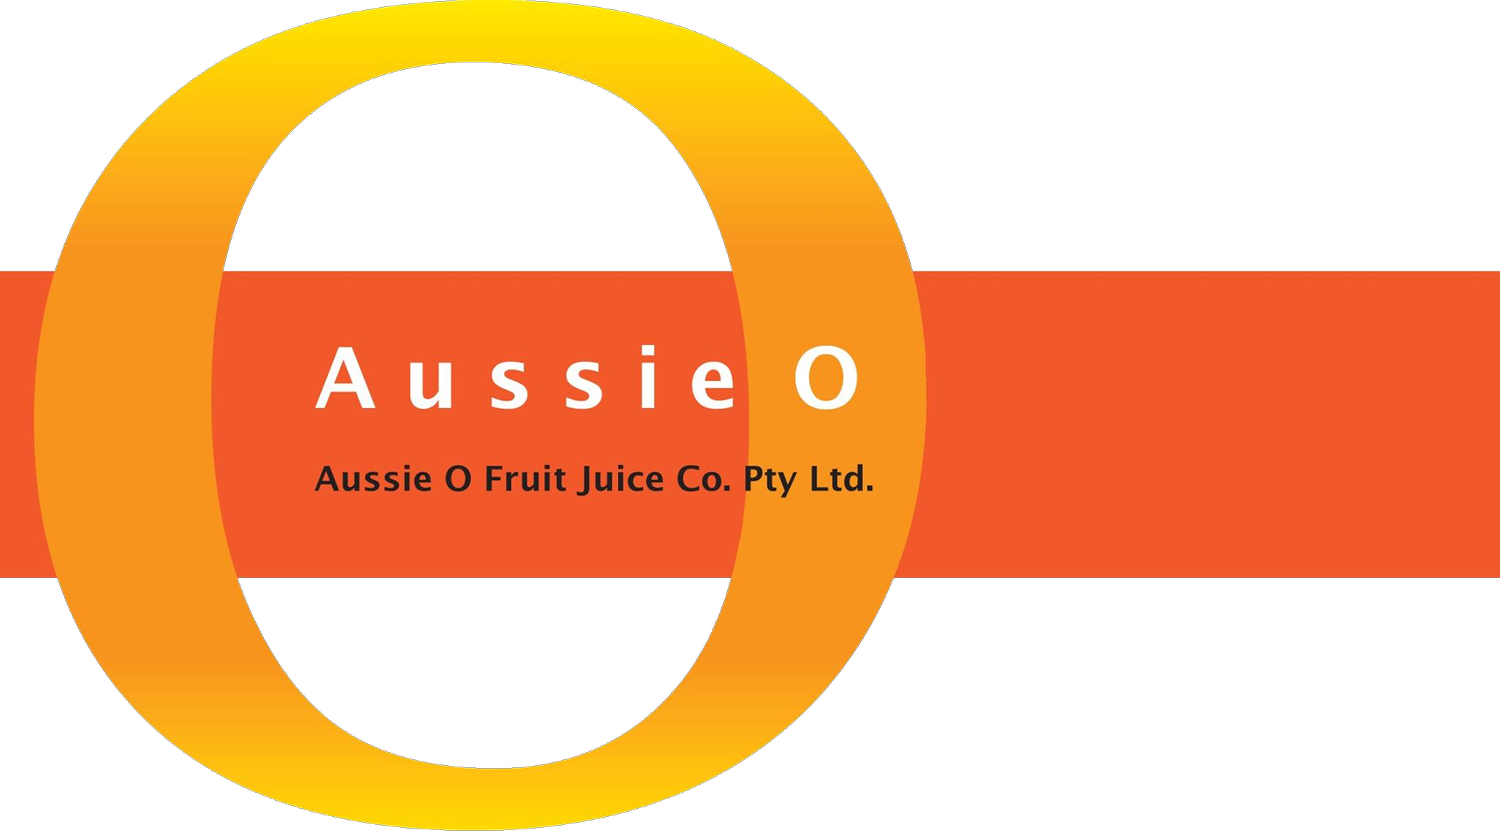 Aussie O Fruit Juice Co.